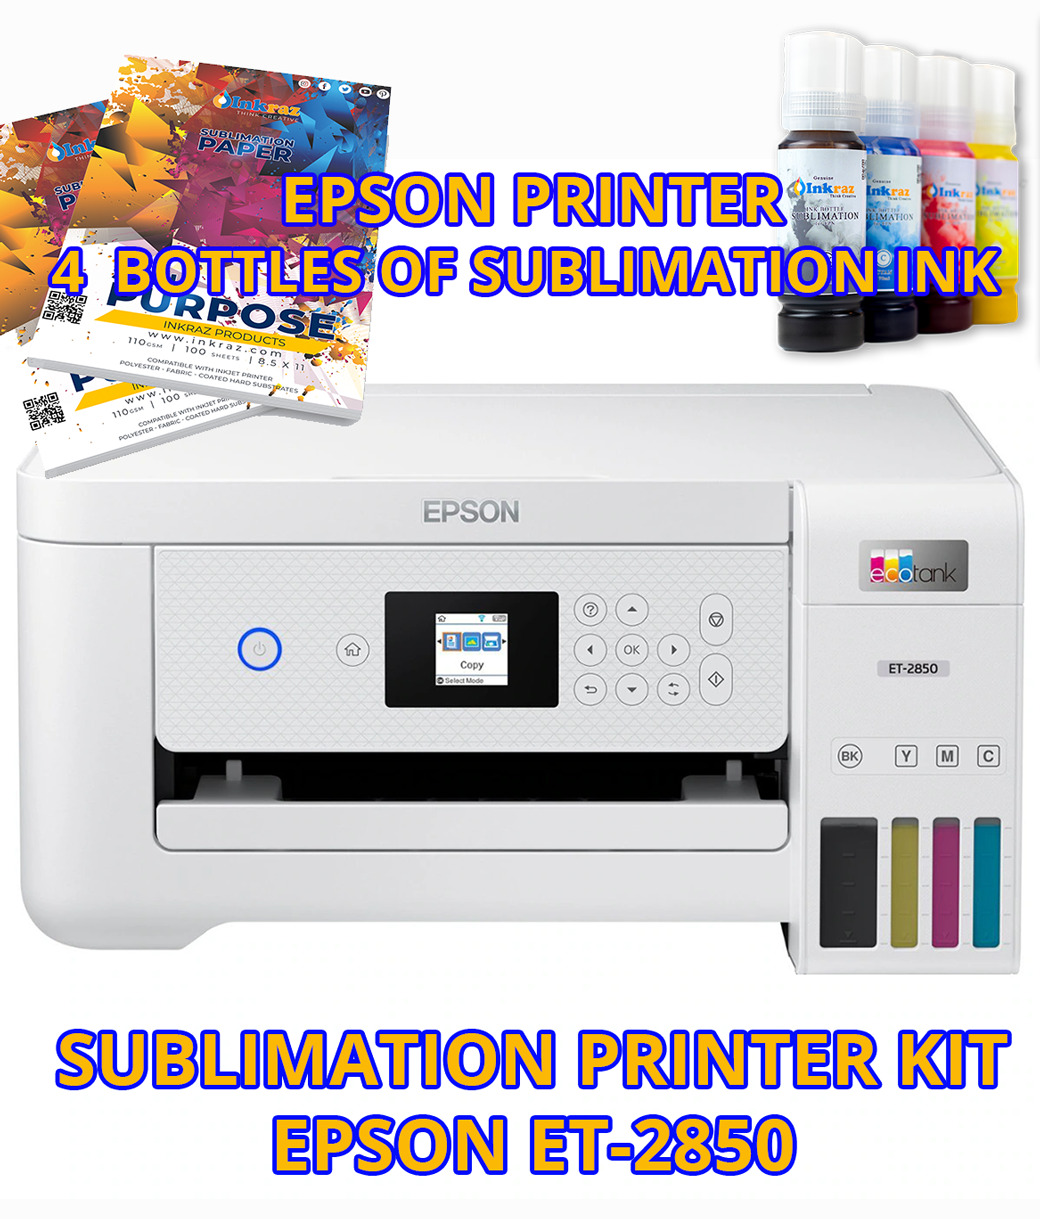 Epson et2850 Printer Sublimation Ink, White, Sublimation Printer Bundle